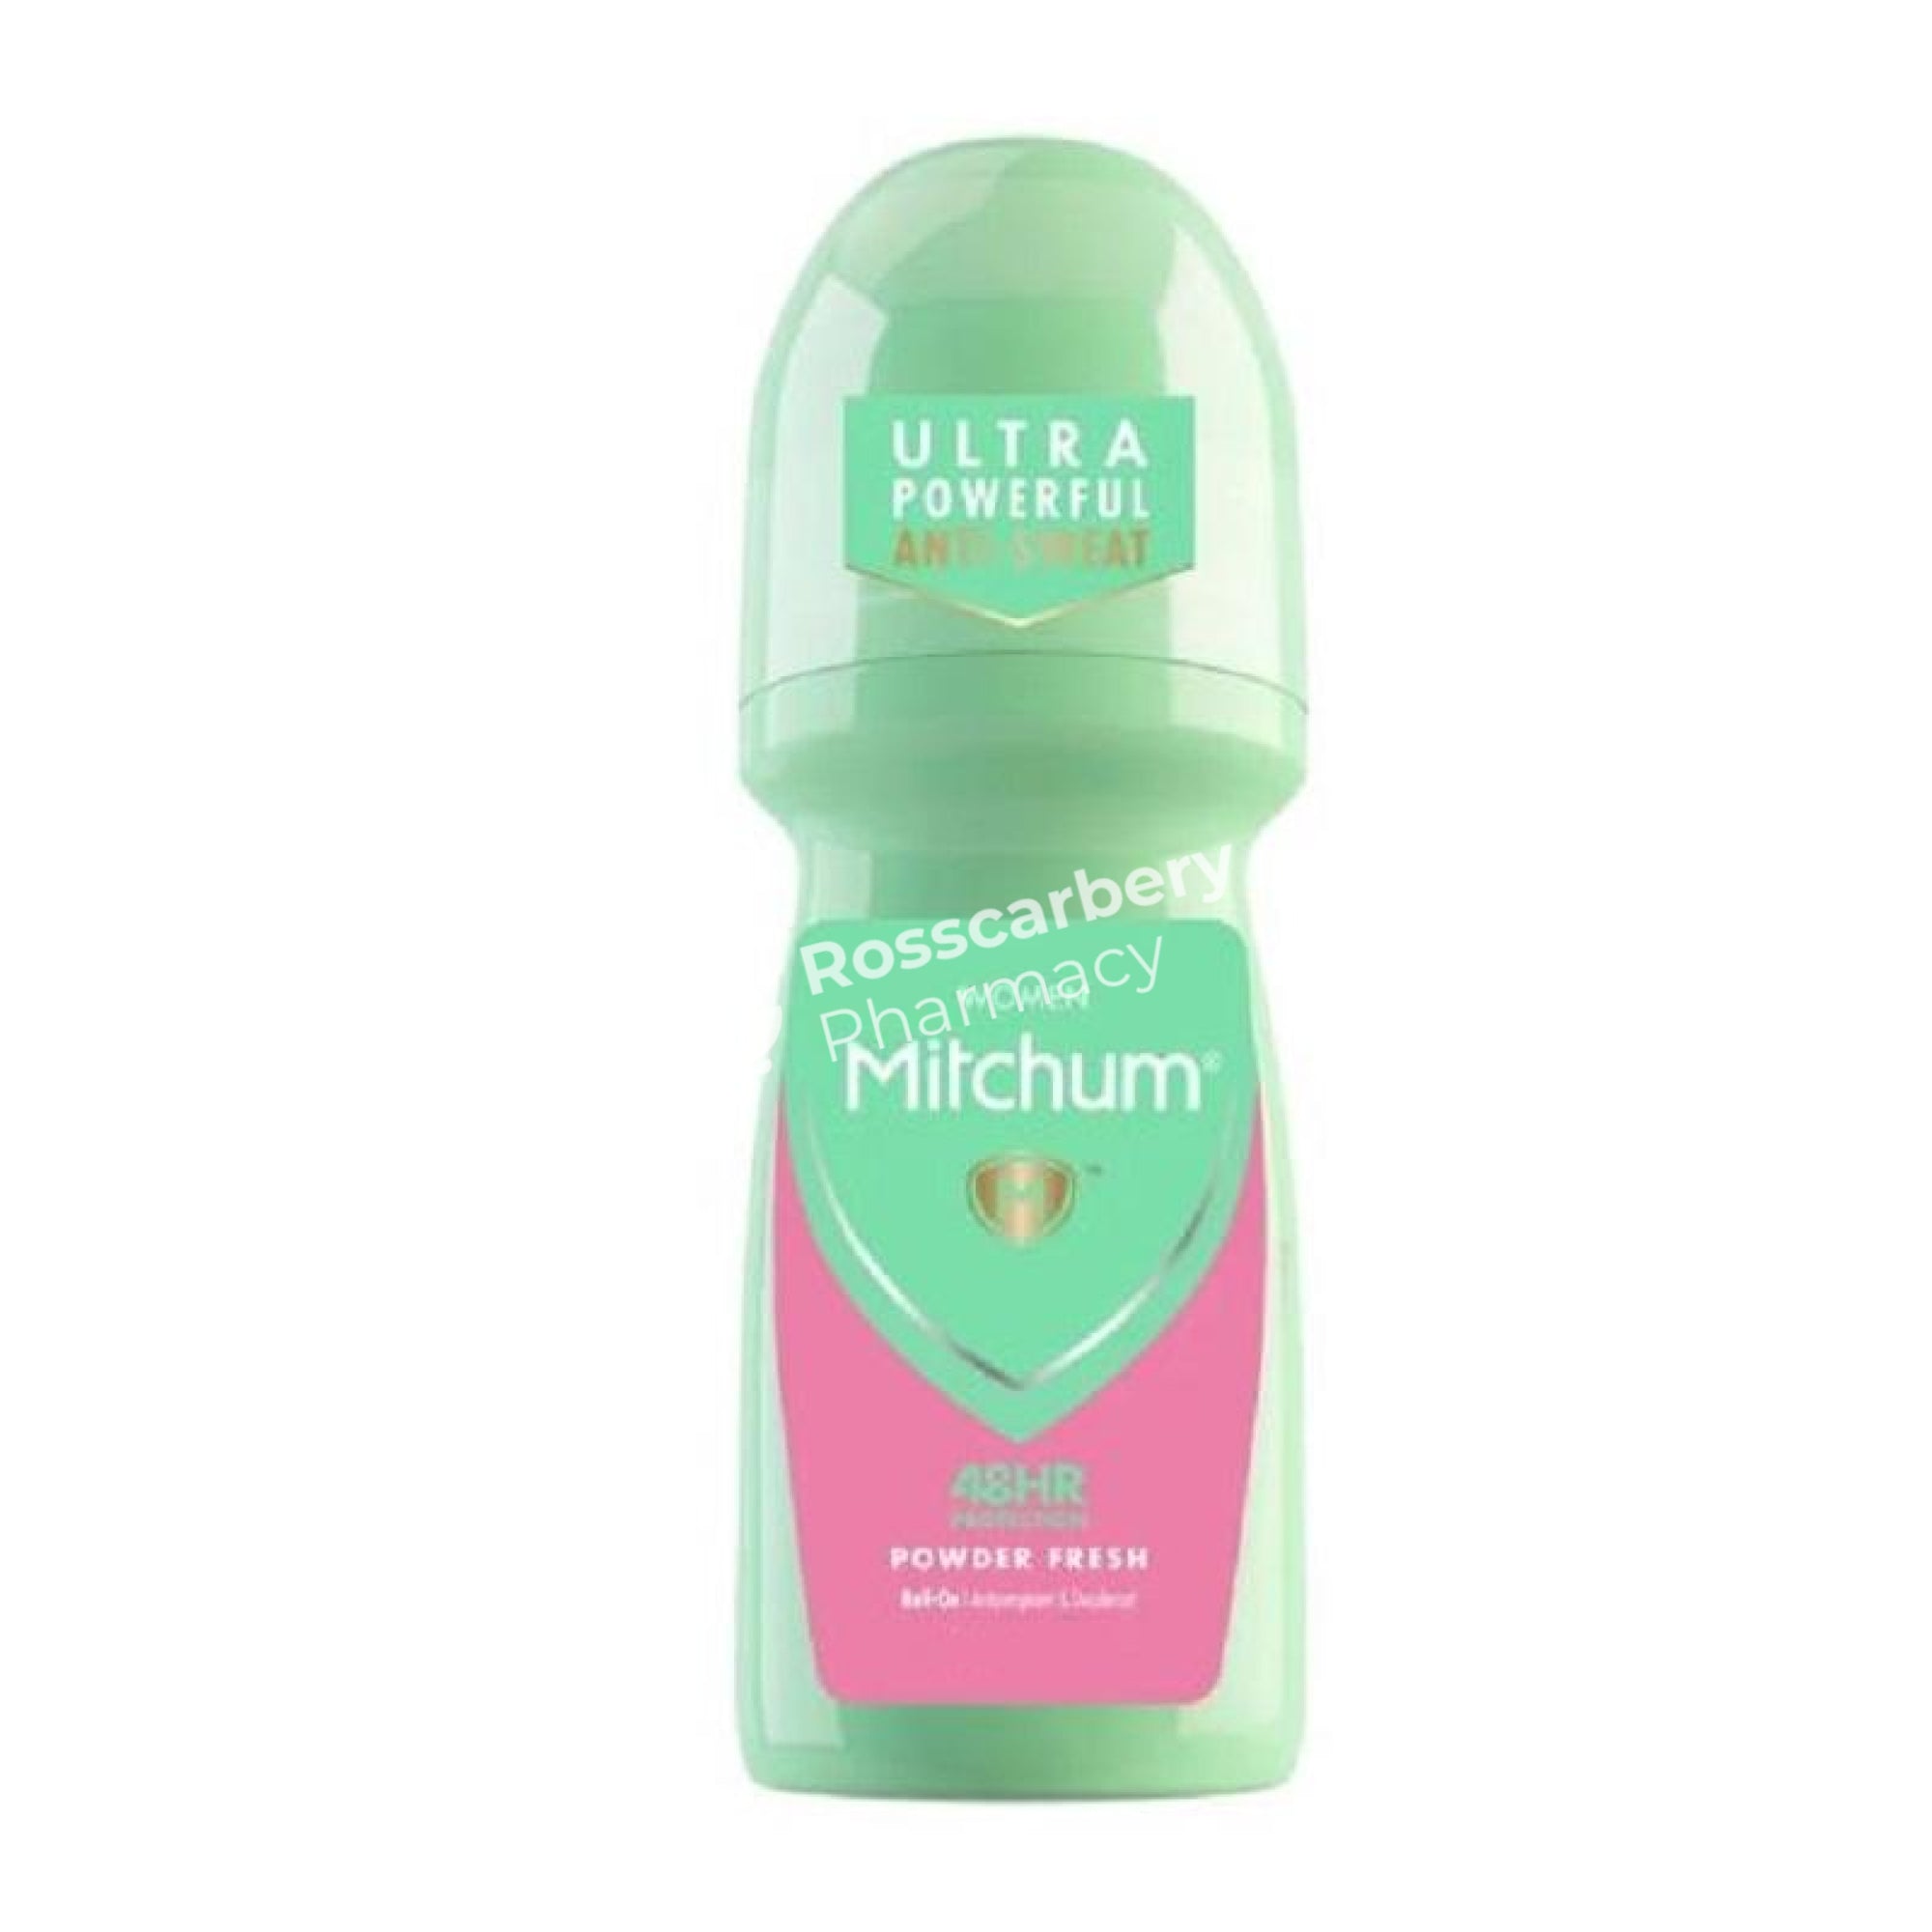 Mitchum 48Hr Protection Powder Fresh Roll-On Antiperspirant & Deodorant Anti-Perspirant